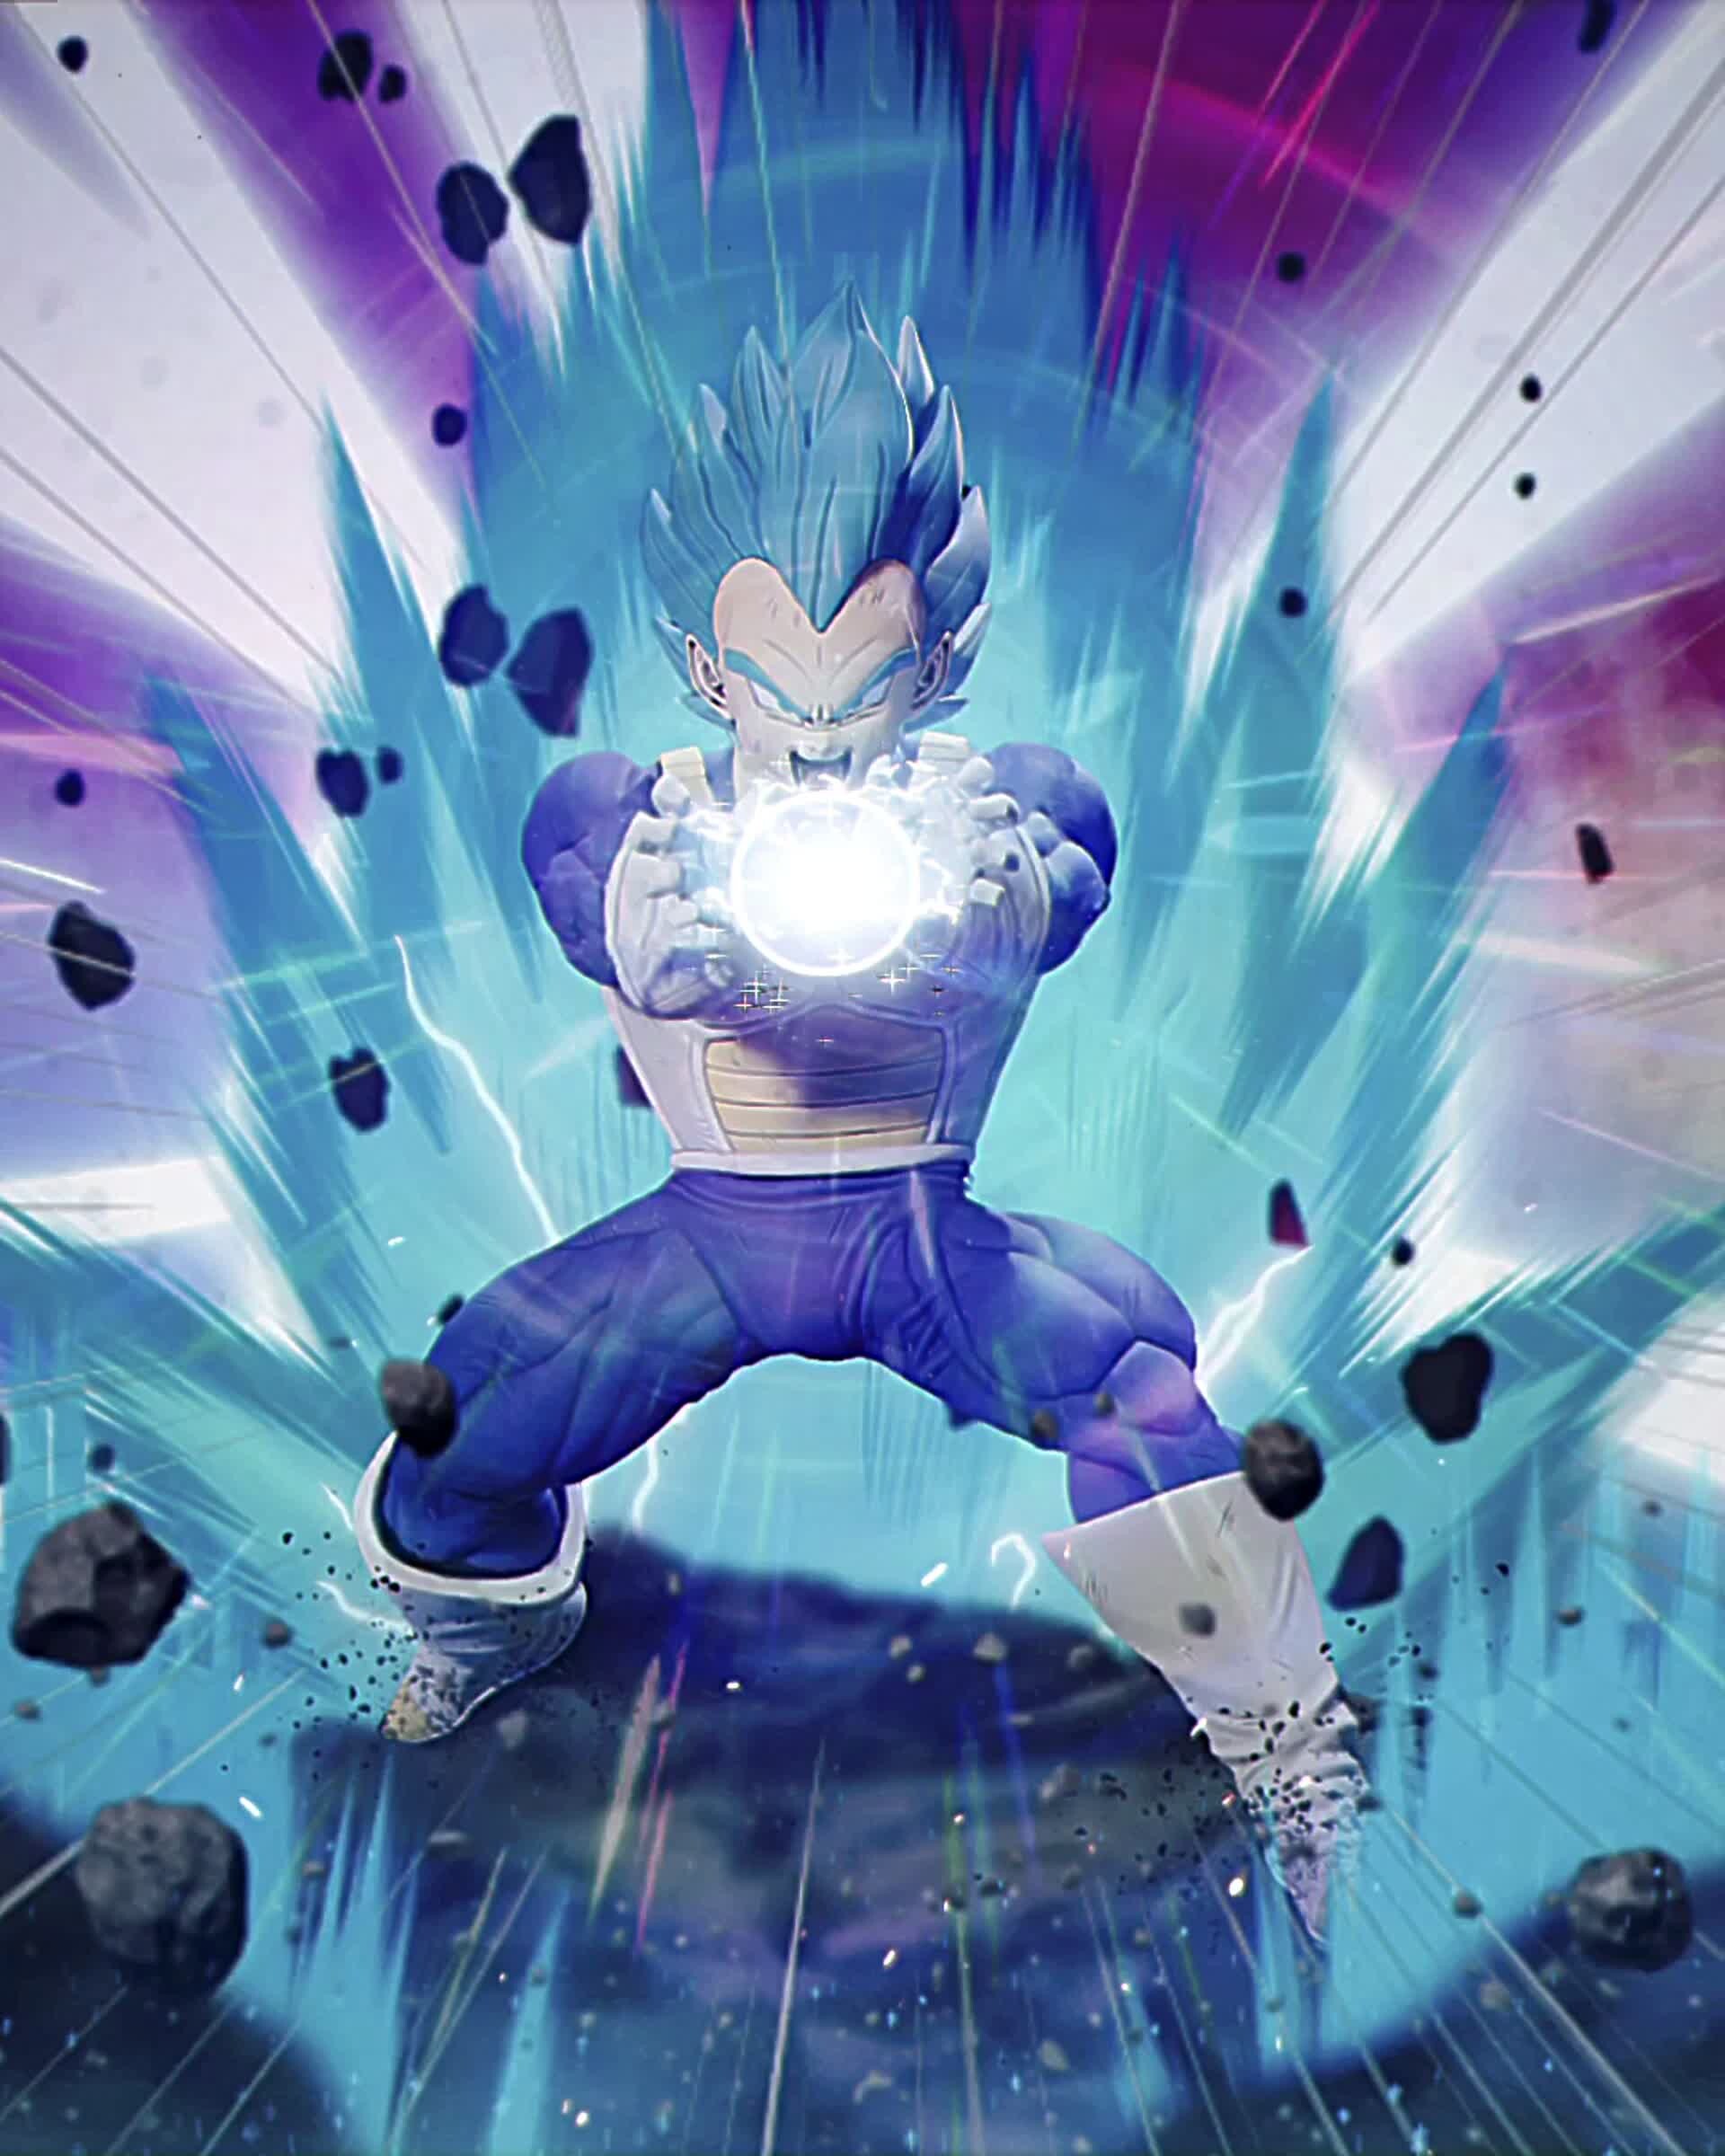 MDesign - Digital Artwork - Dragon Ball - Goku Super Saiyan